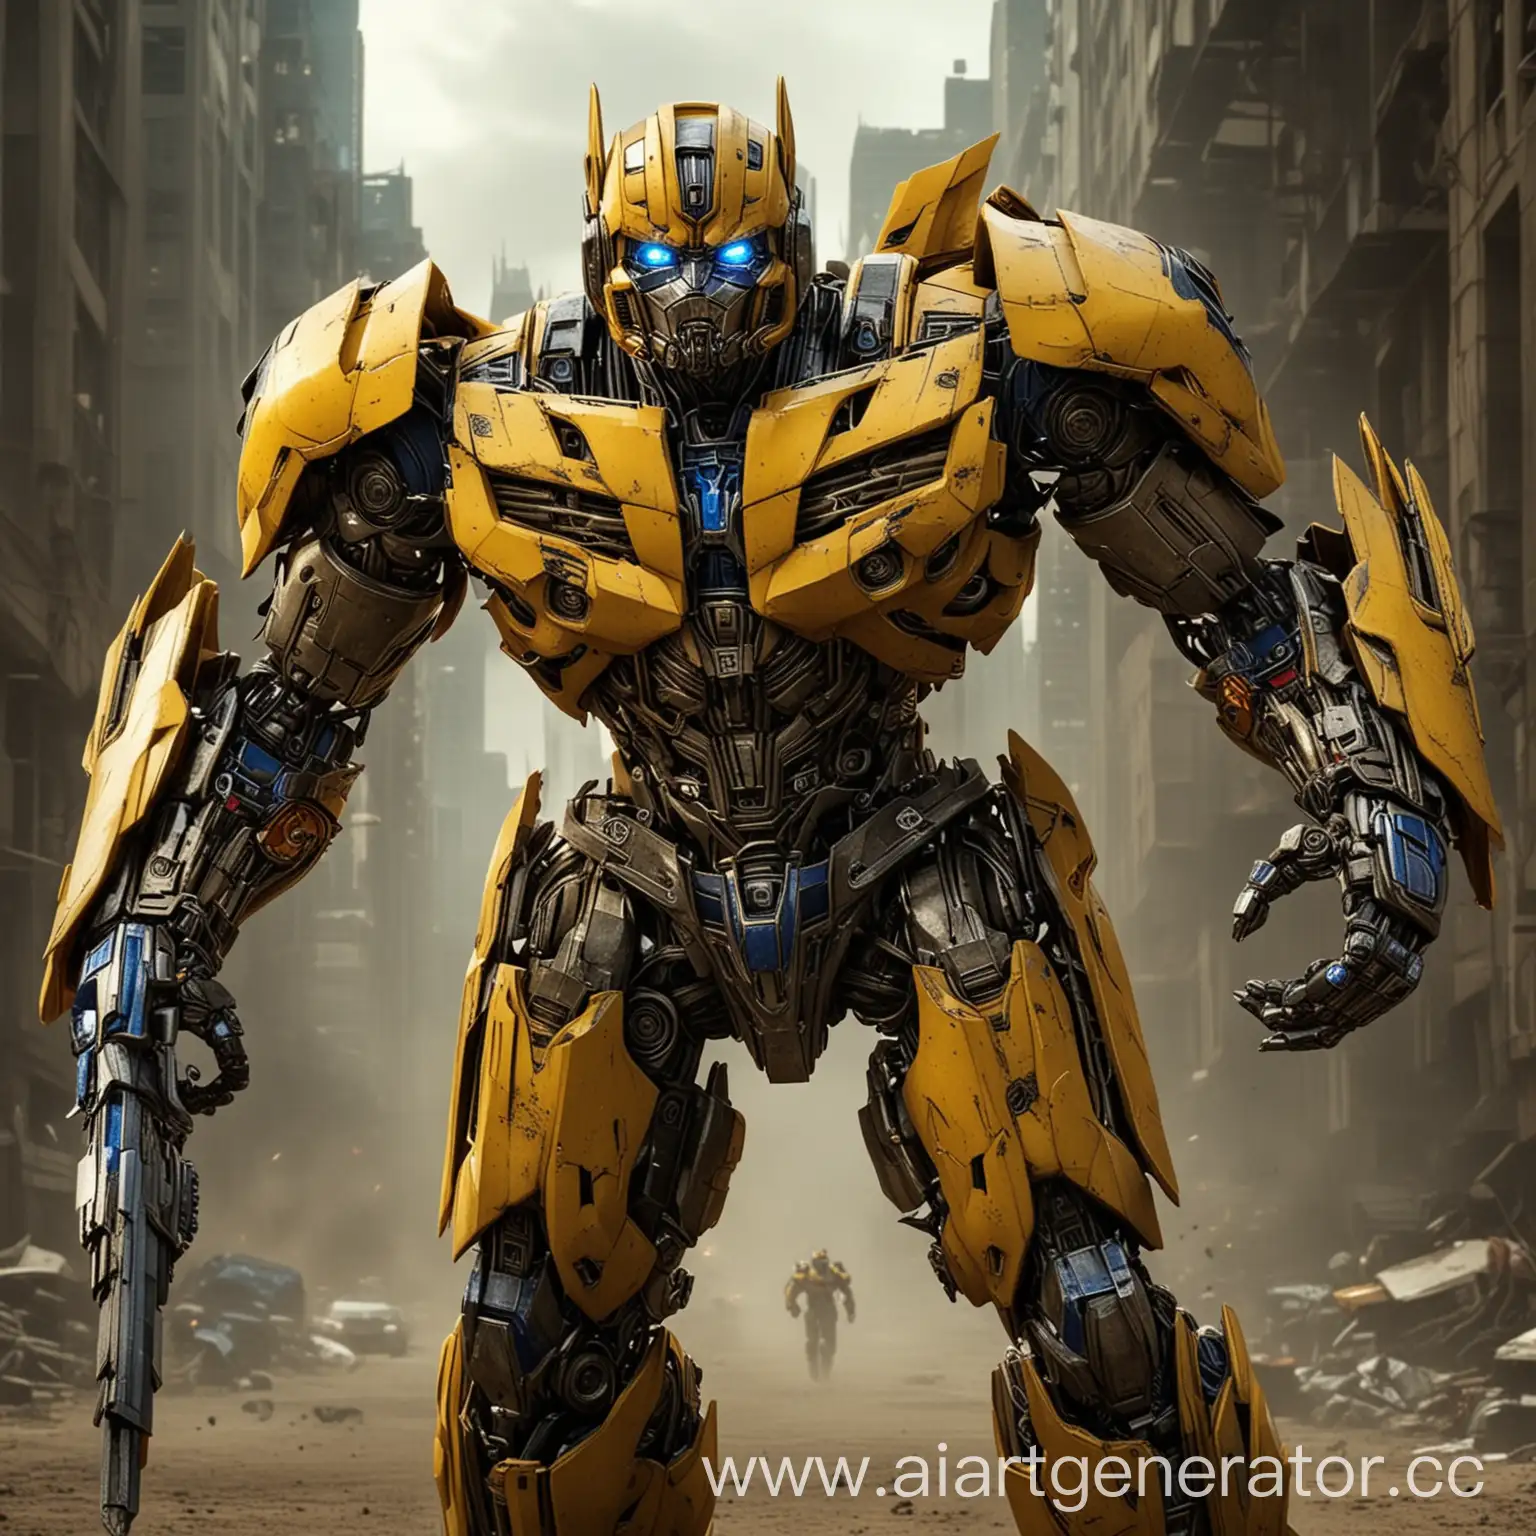 Transformers-8-Bumblebee-Battling-Decepticons-in-Urban-Warfare